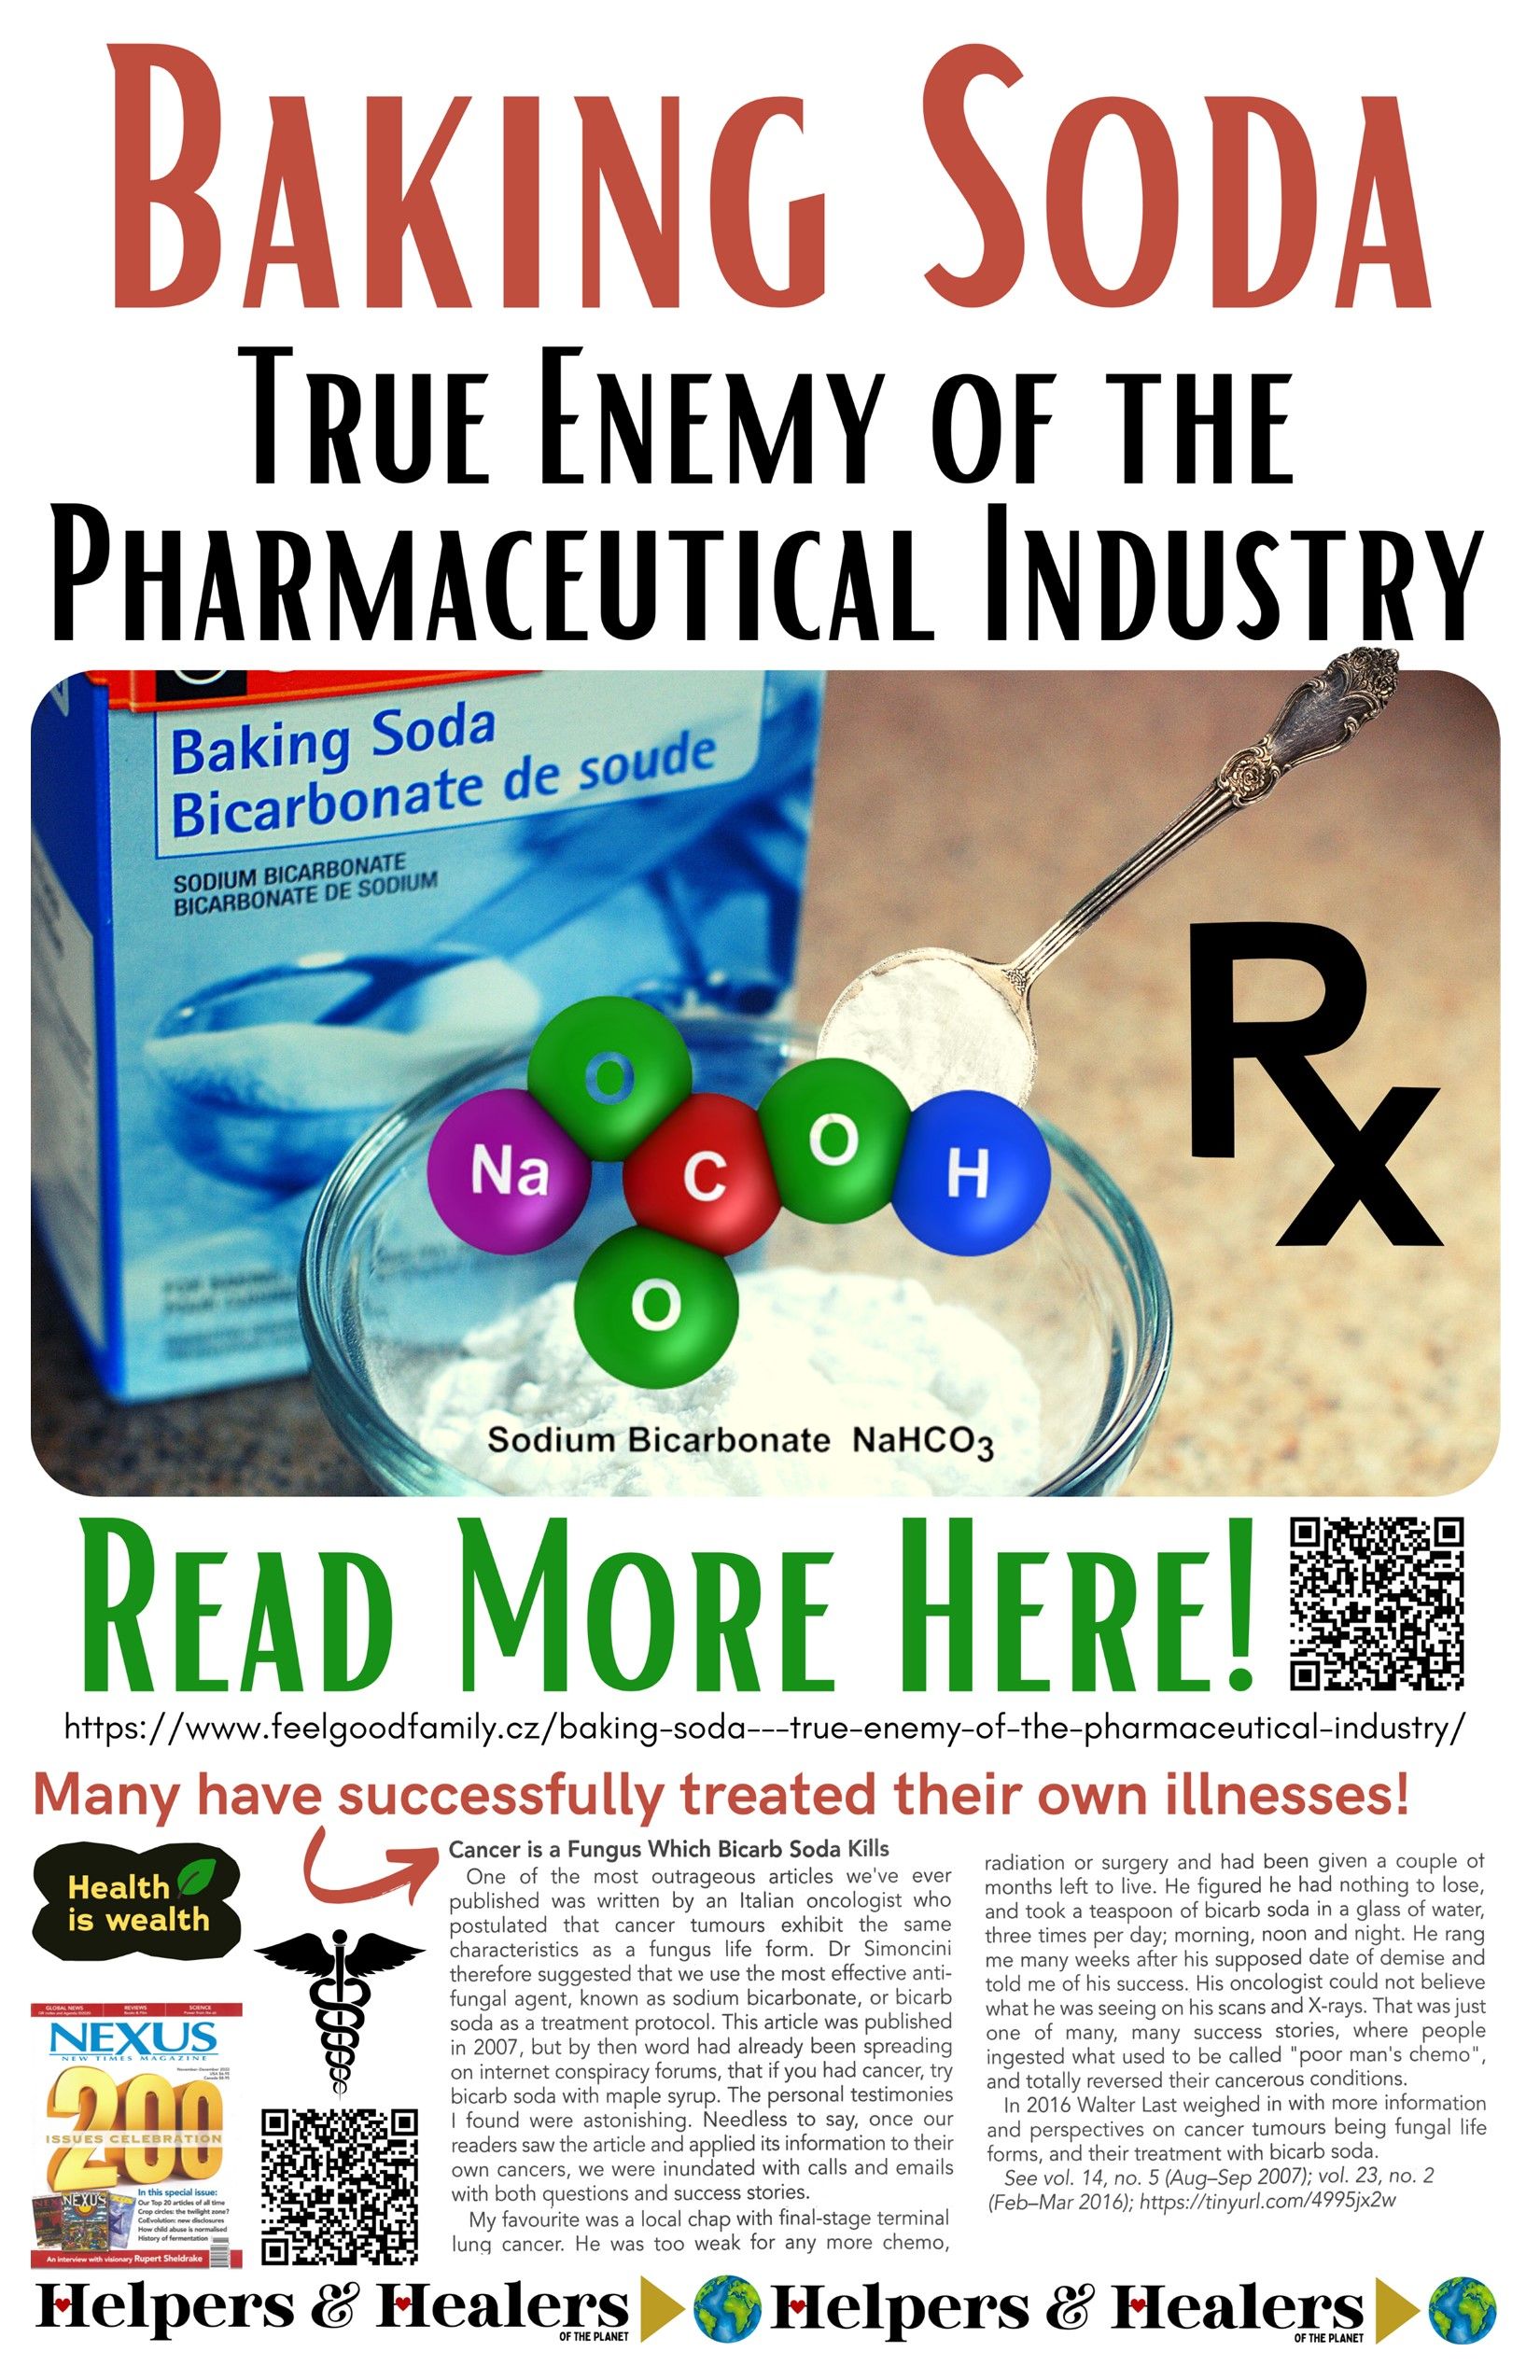 Baking Soda_Enemy of the Pharmaceutical Industry jpg.jpg